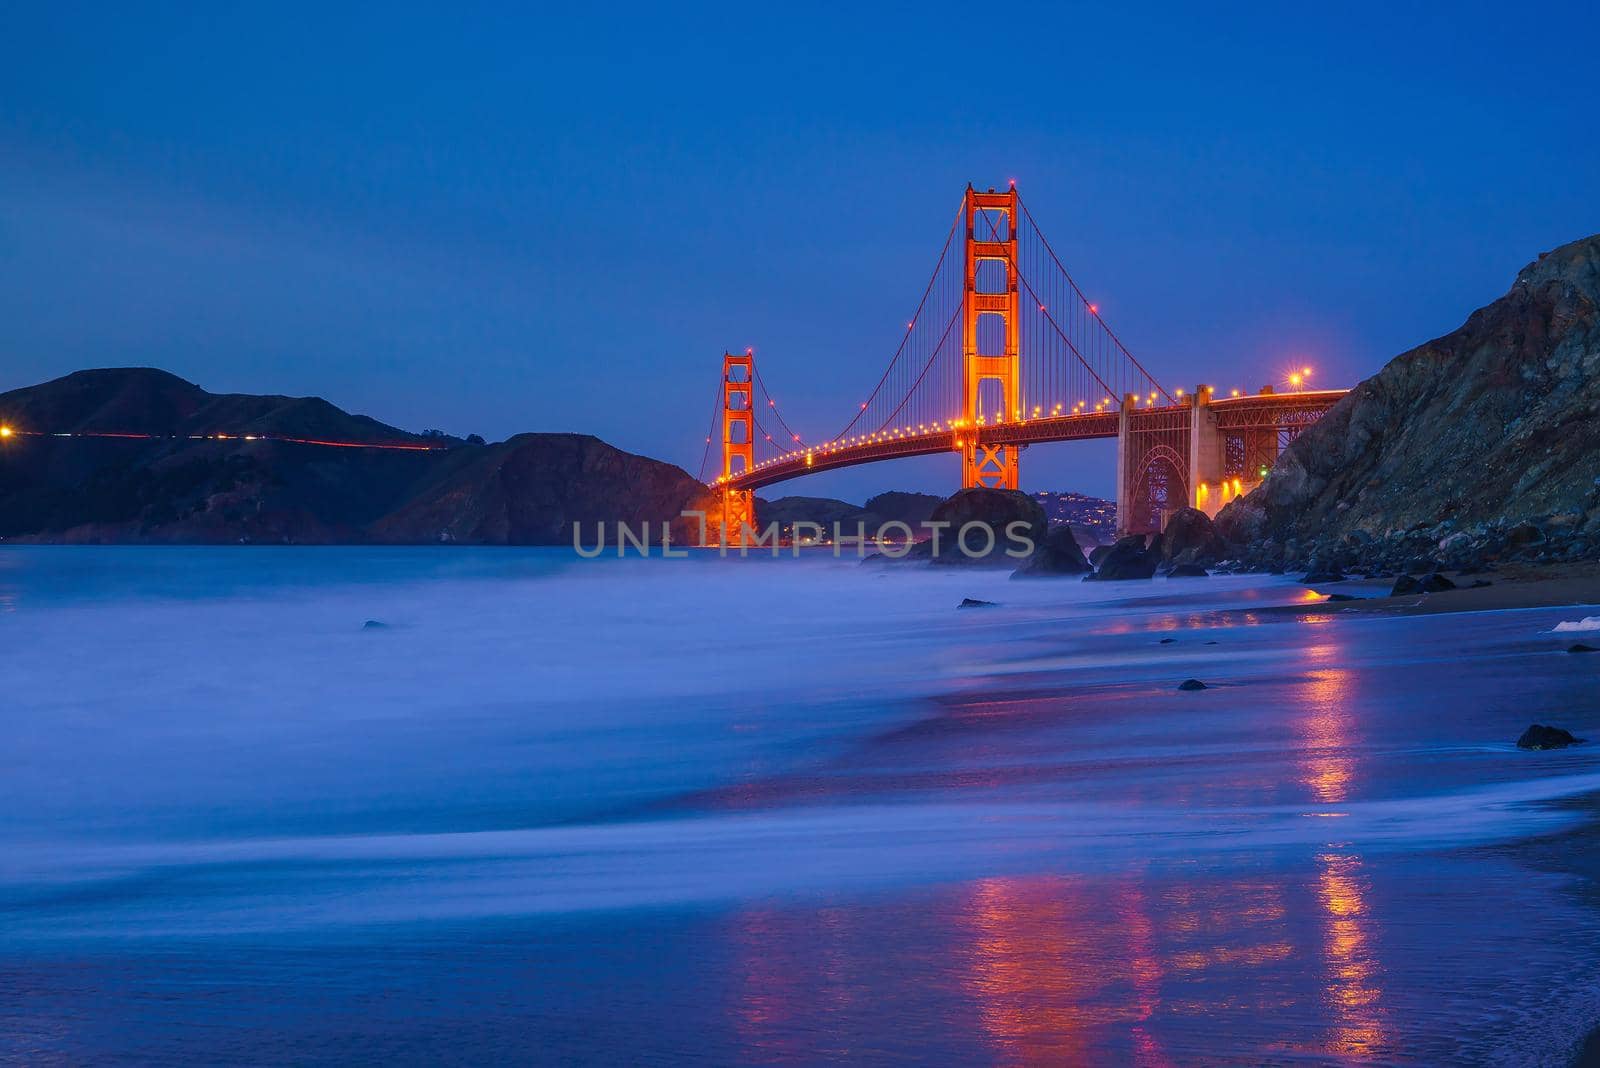 Golden Gate Bridge in San Francisco, California at sunset.